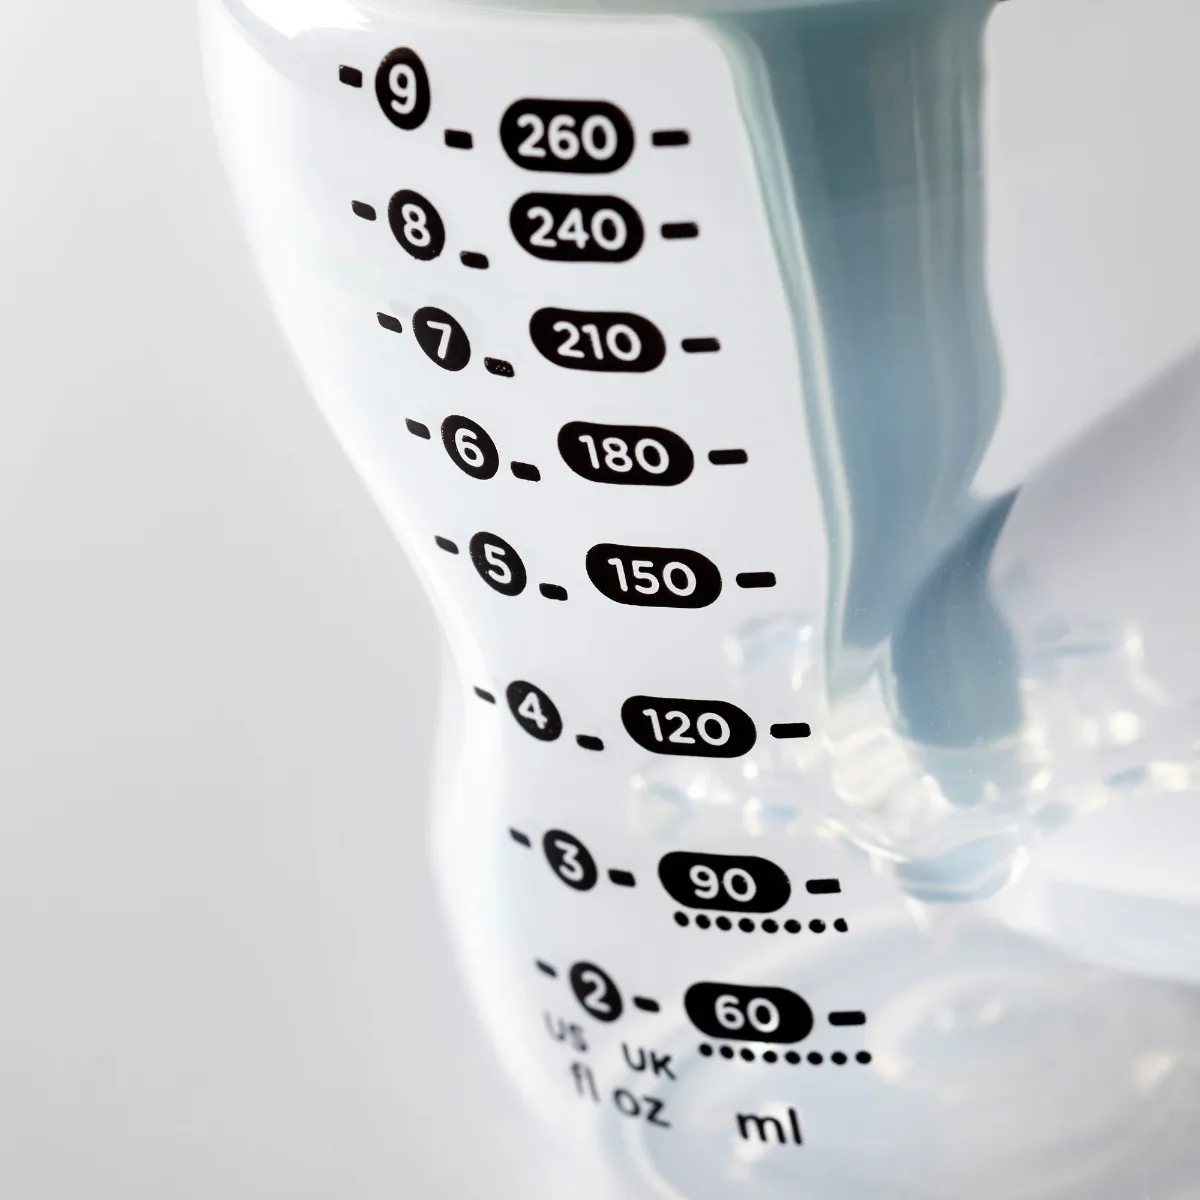 Tommee Tippee Advanced Anti-Colic Samosterilizační kojenecká lahev Pomalý průtok 0m+ 260 ml 2 ks